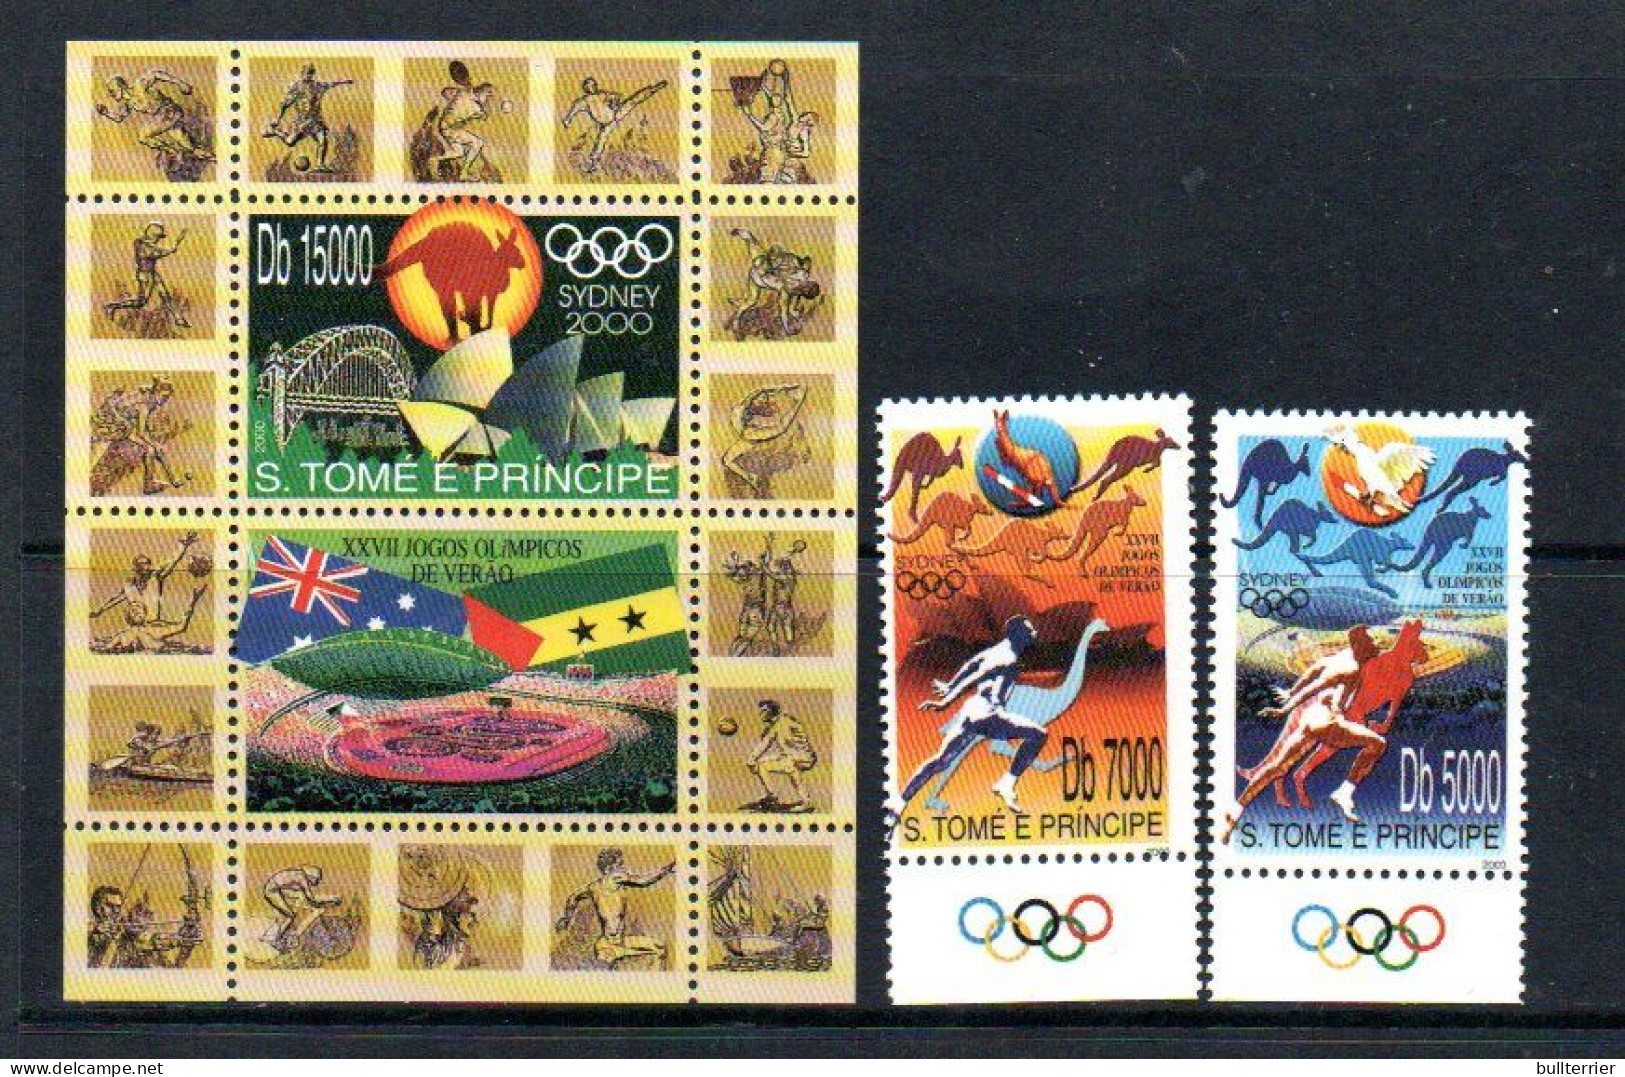 OLYMPICS -  ST HOMAS PRINCE -  2000-Sydney Olympics Set Of 2 + S/sheet  Mint Never Hinged - Sommer 2000: Sydney